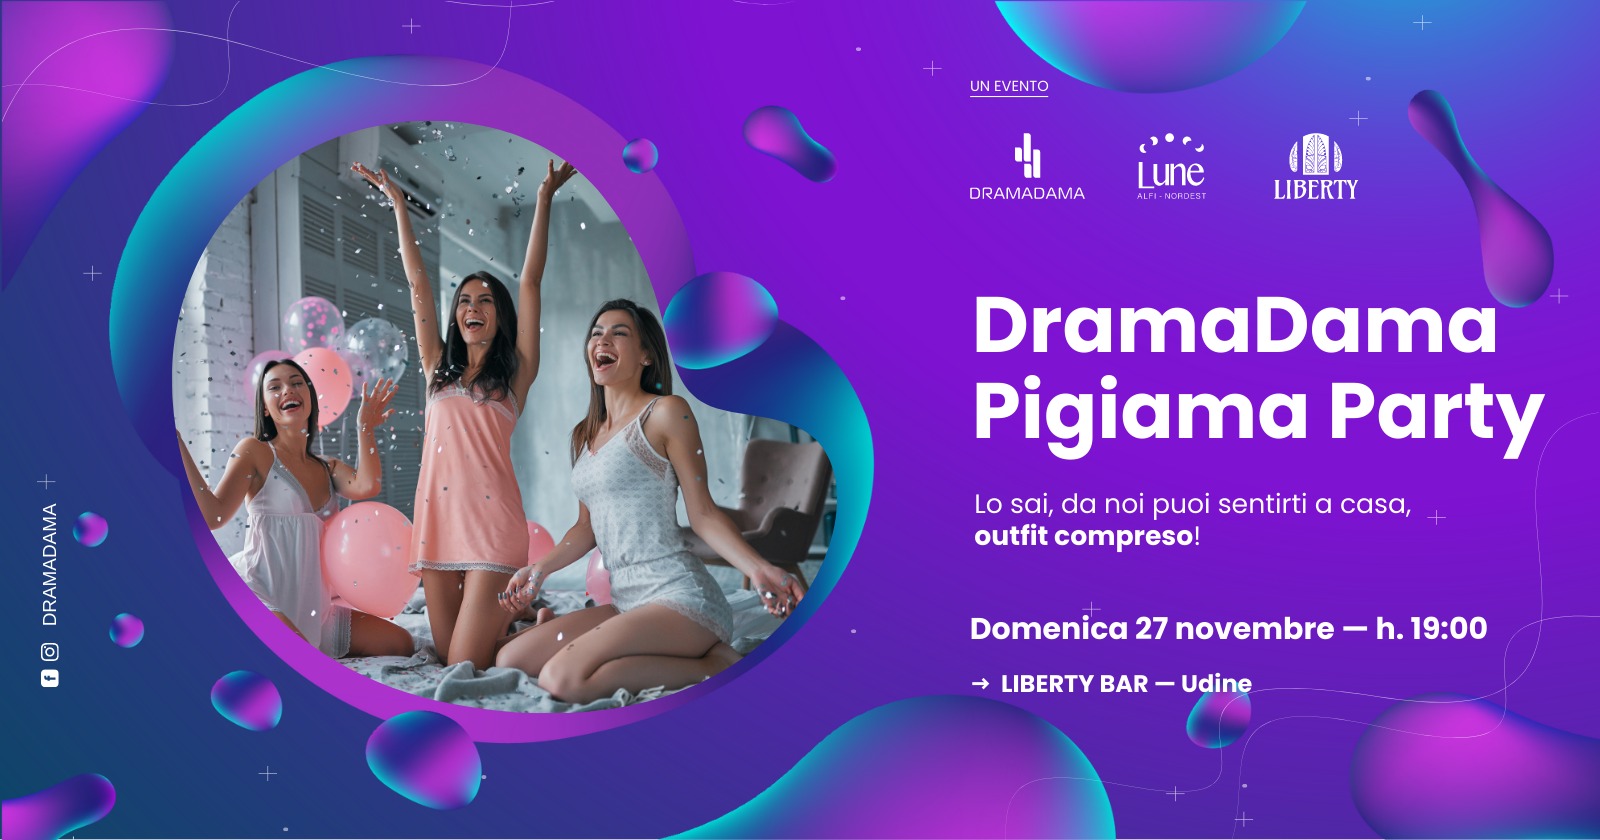 DramaDama Night, Pigiama Party, Udine